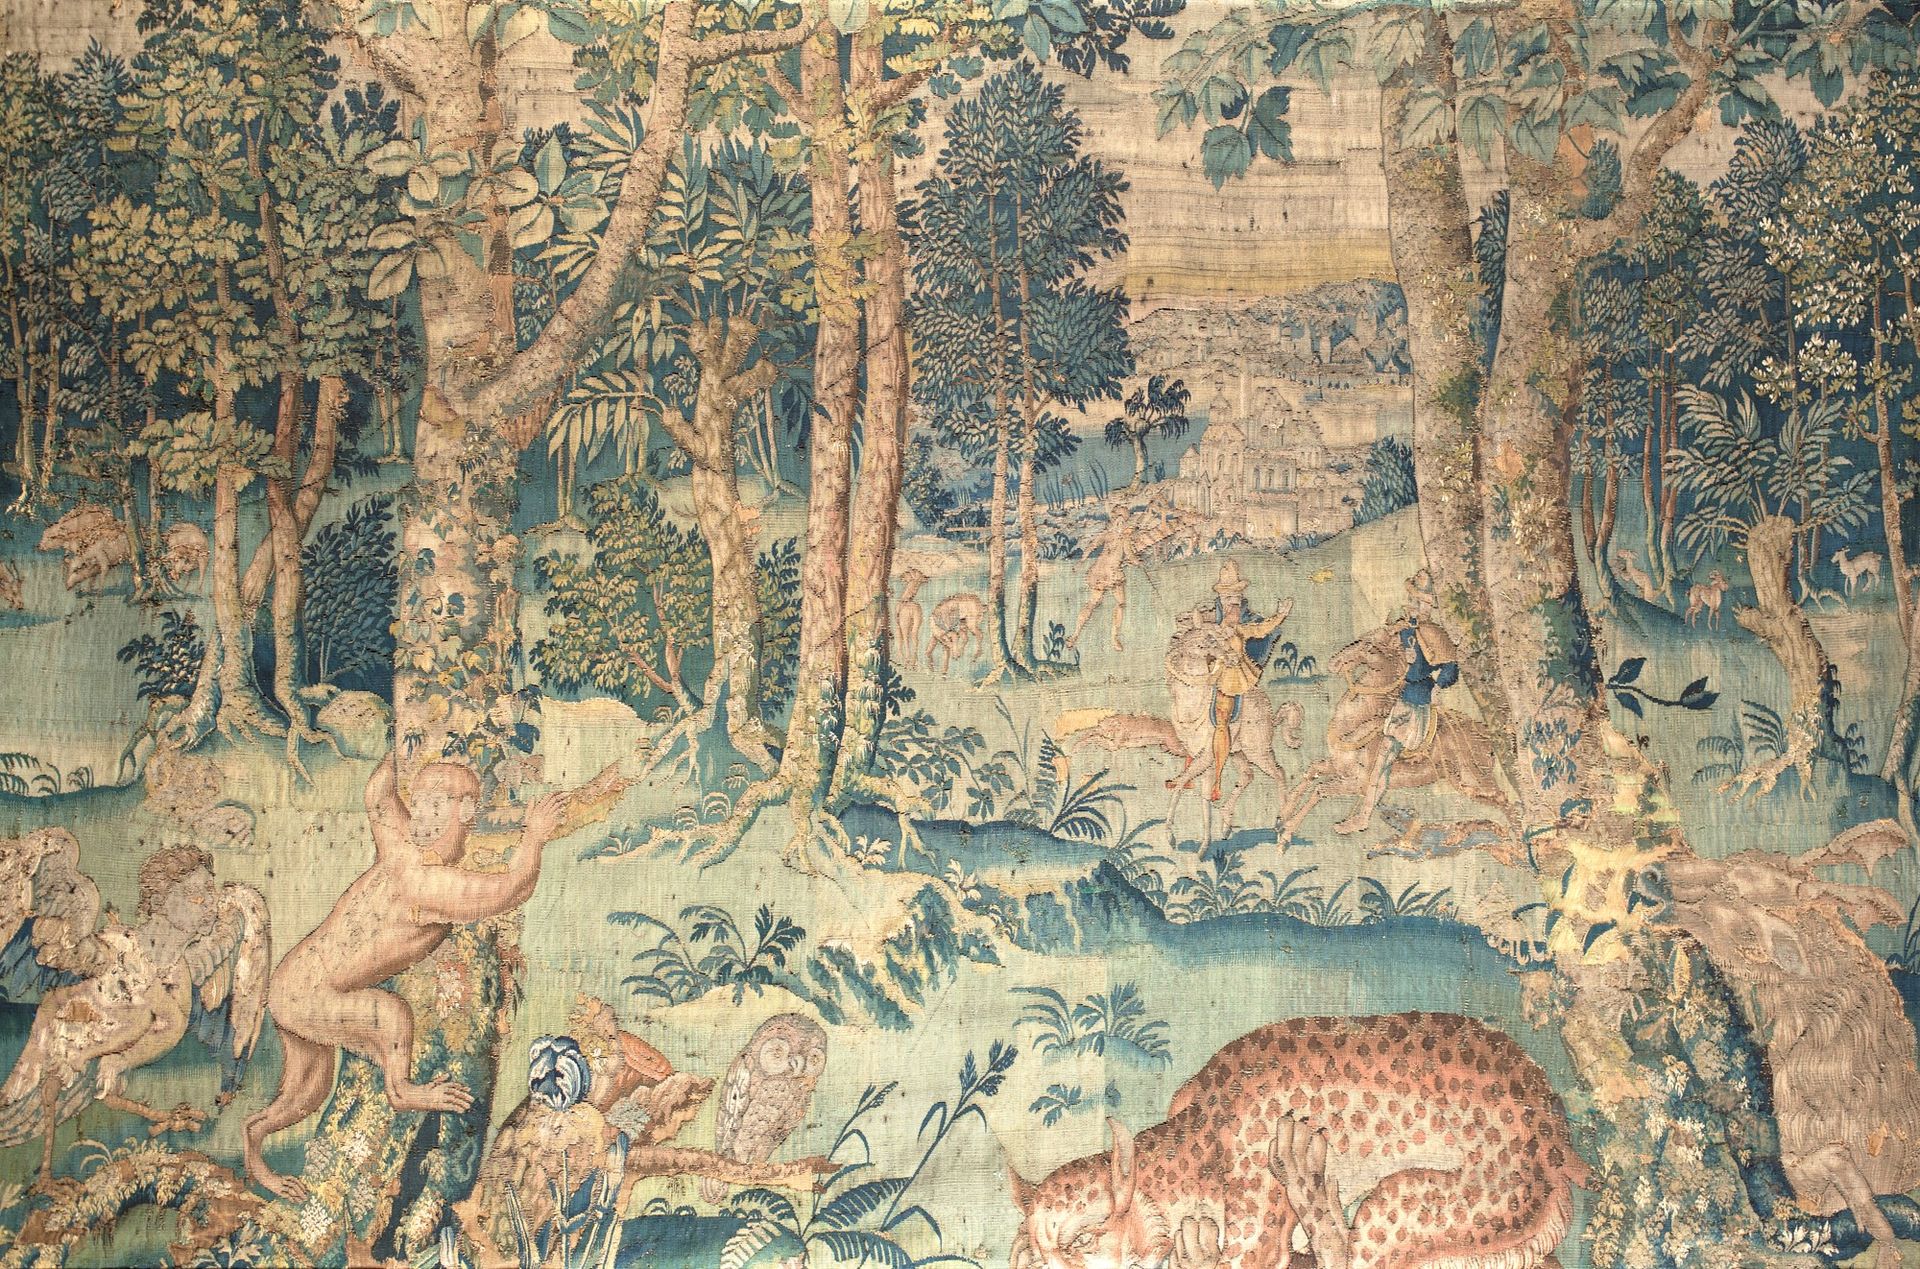 FLEMISH TAPESTRY, 17TH CENTURY 描绘了一个由骑士和动物组成的河流景观。